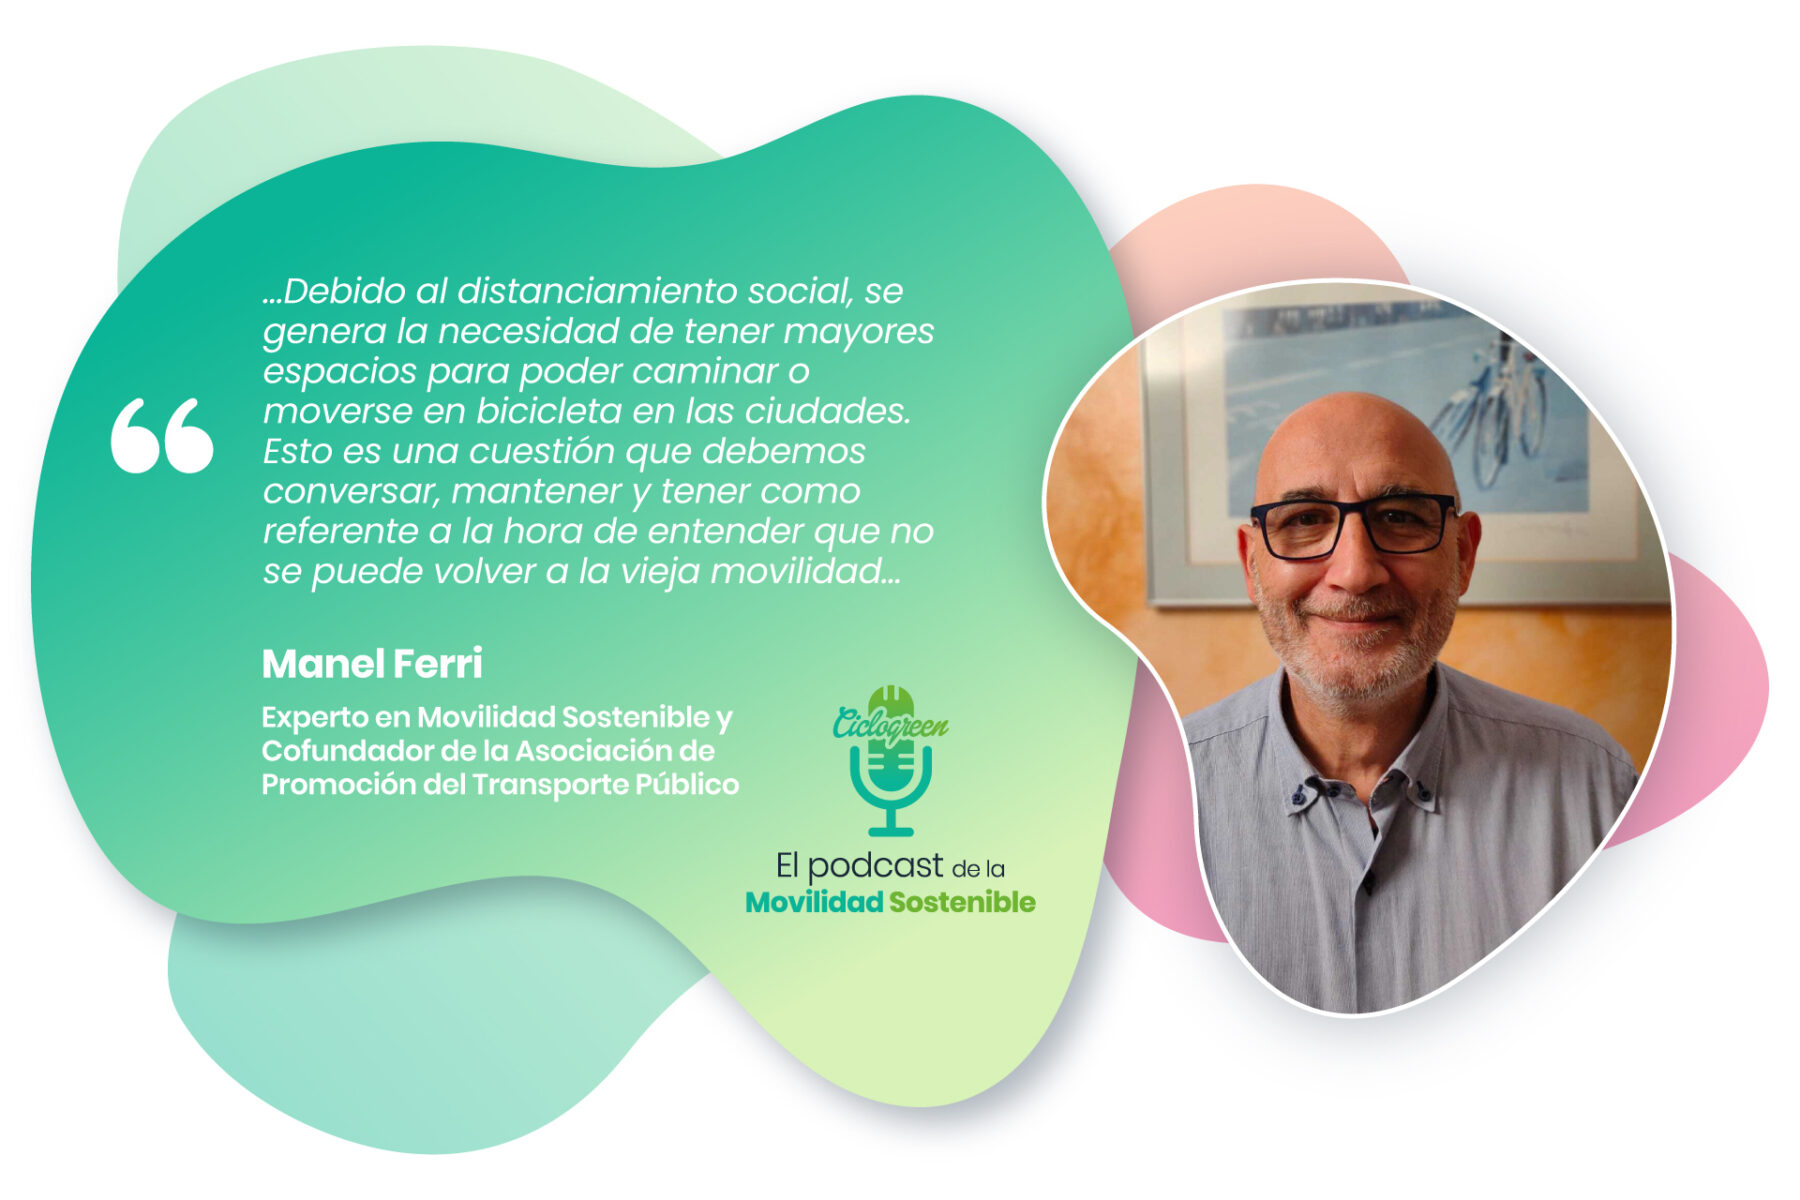 El Podcast de la Movilidad Sostenible entrevista a Manel Ferri